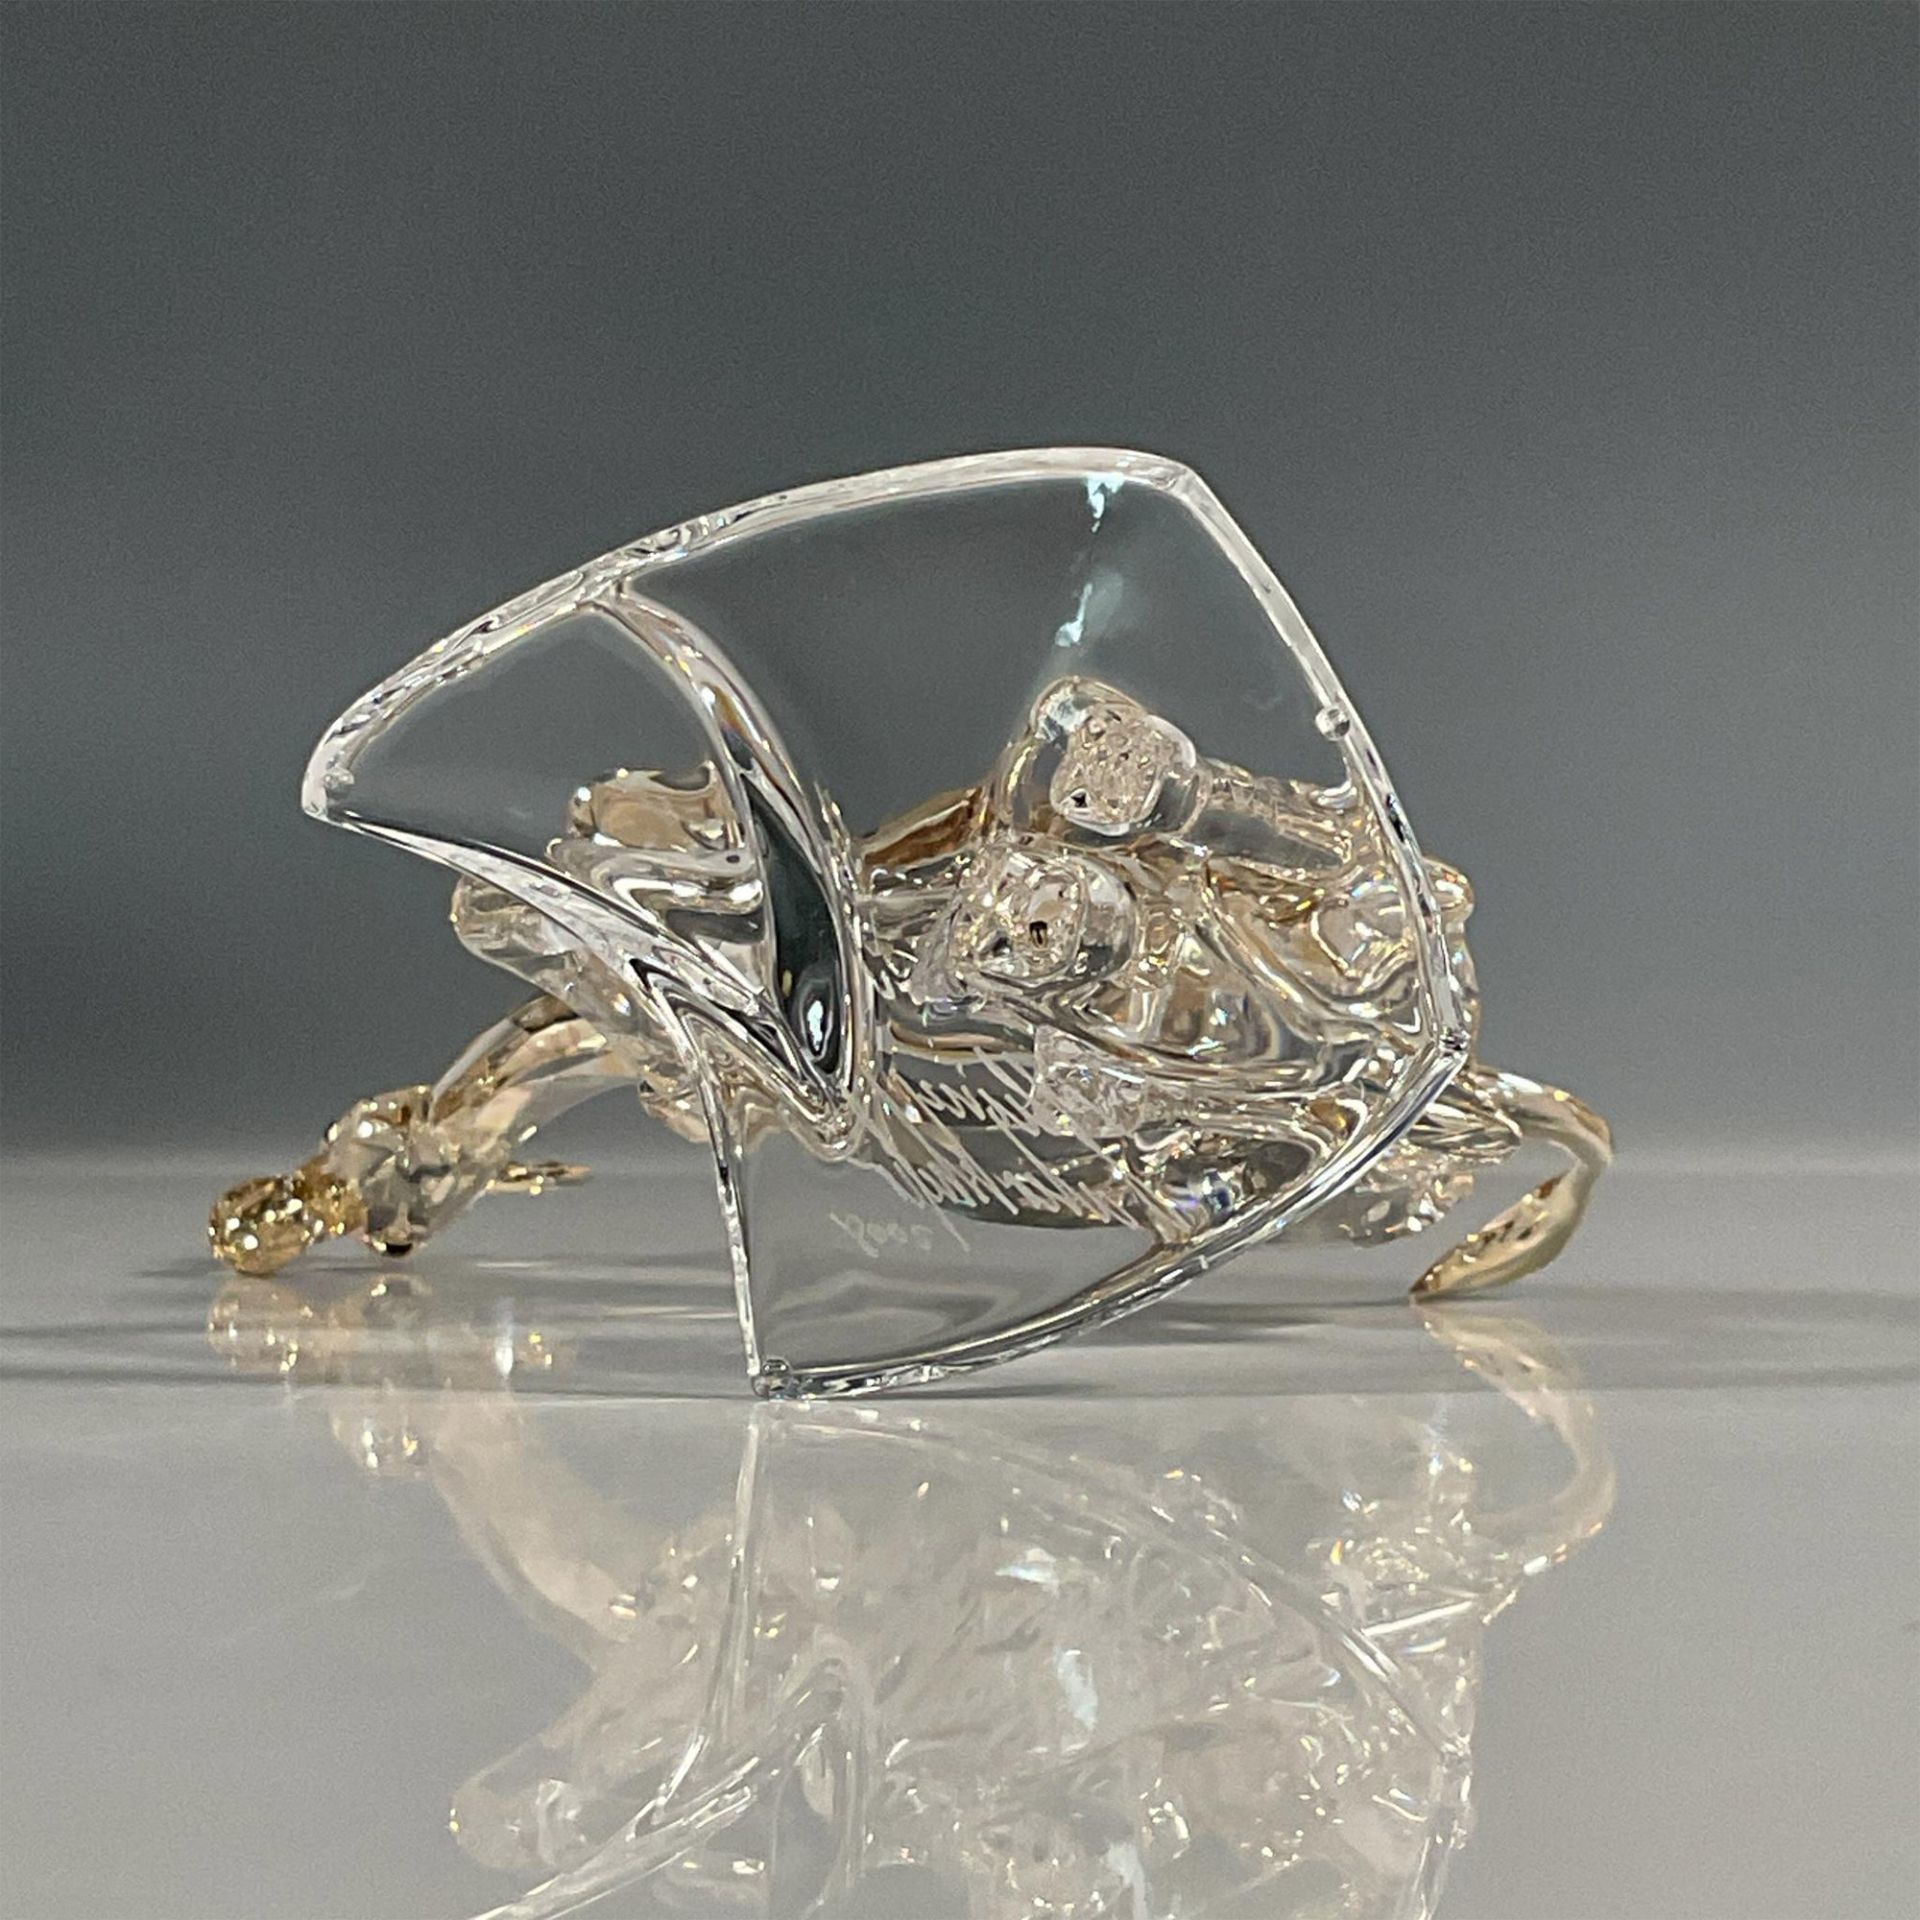 Swarovski Crystal Figurine, Running Giraffe - Image 6 of 6